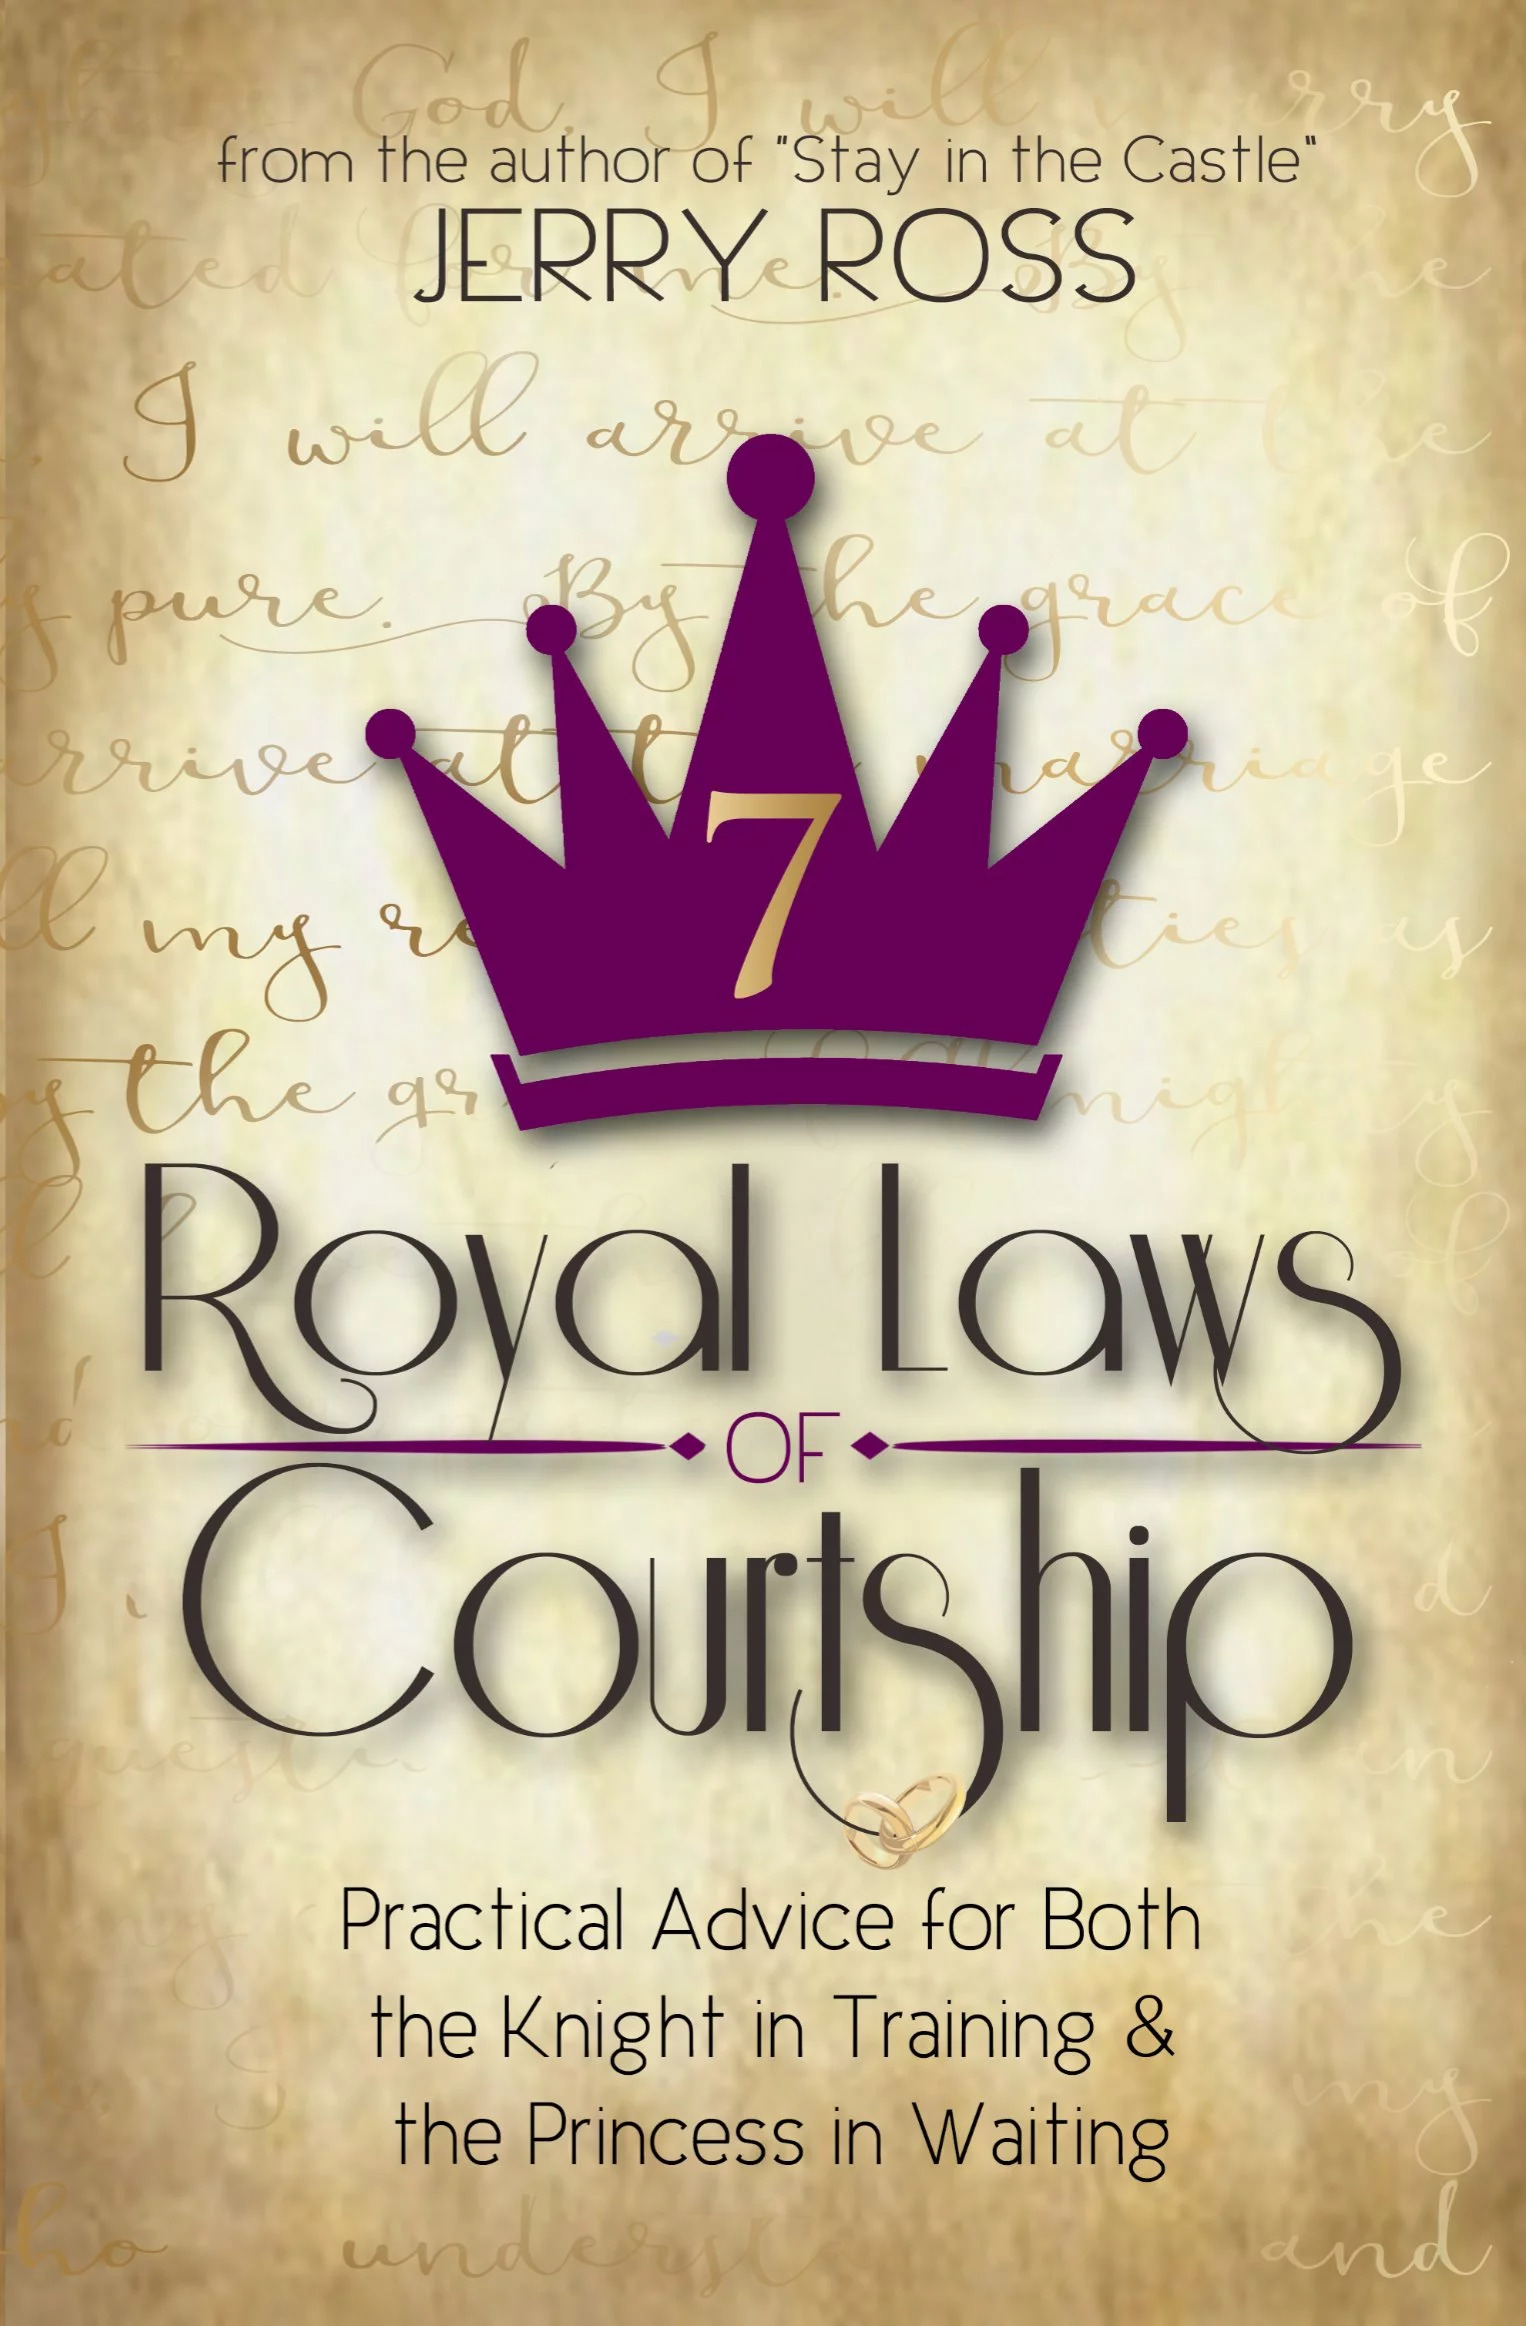 Seven Royal Laws of Courtship